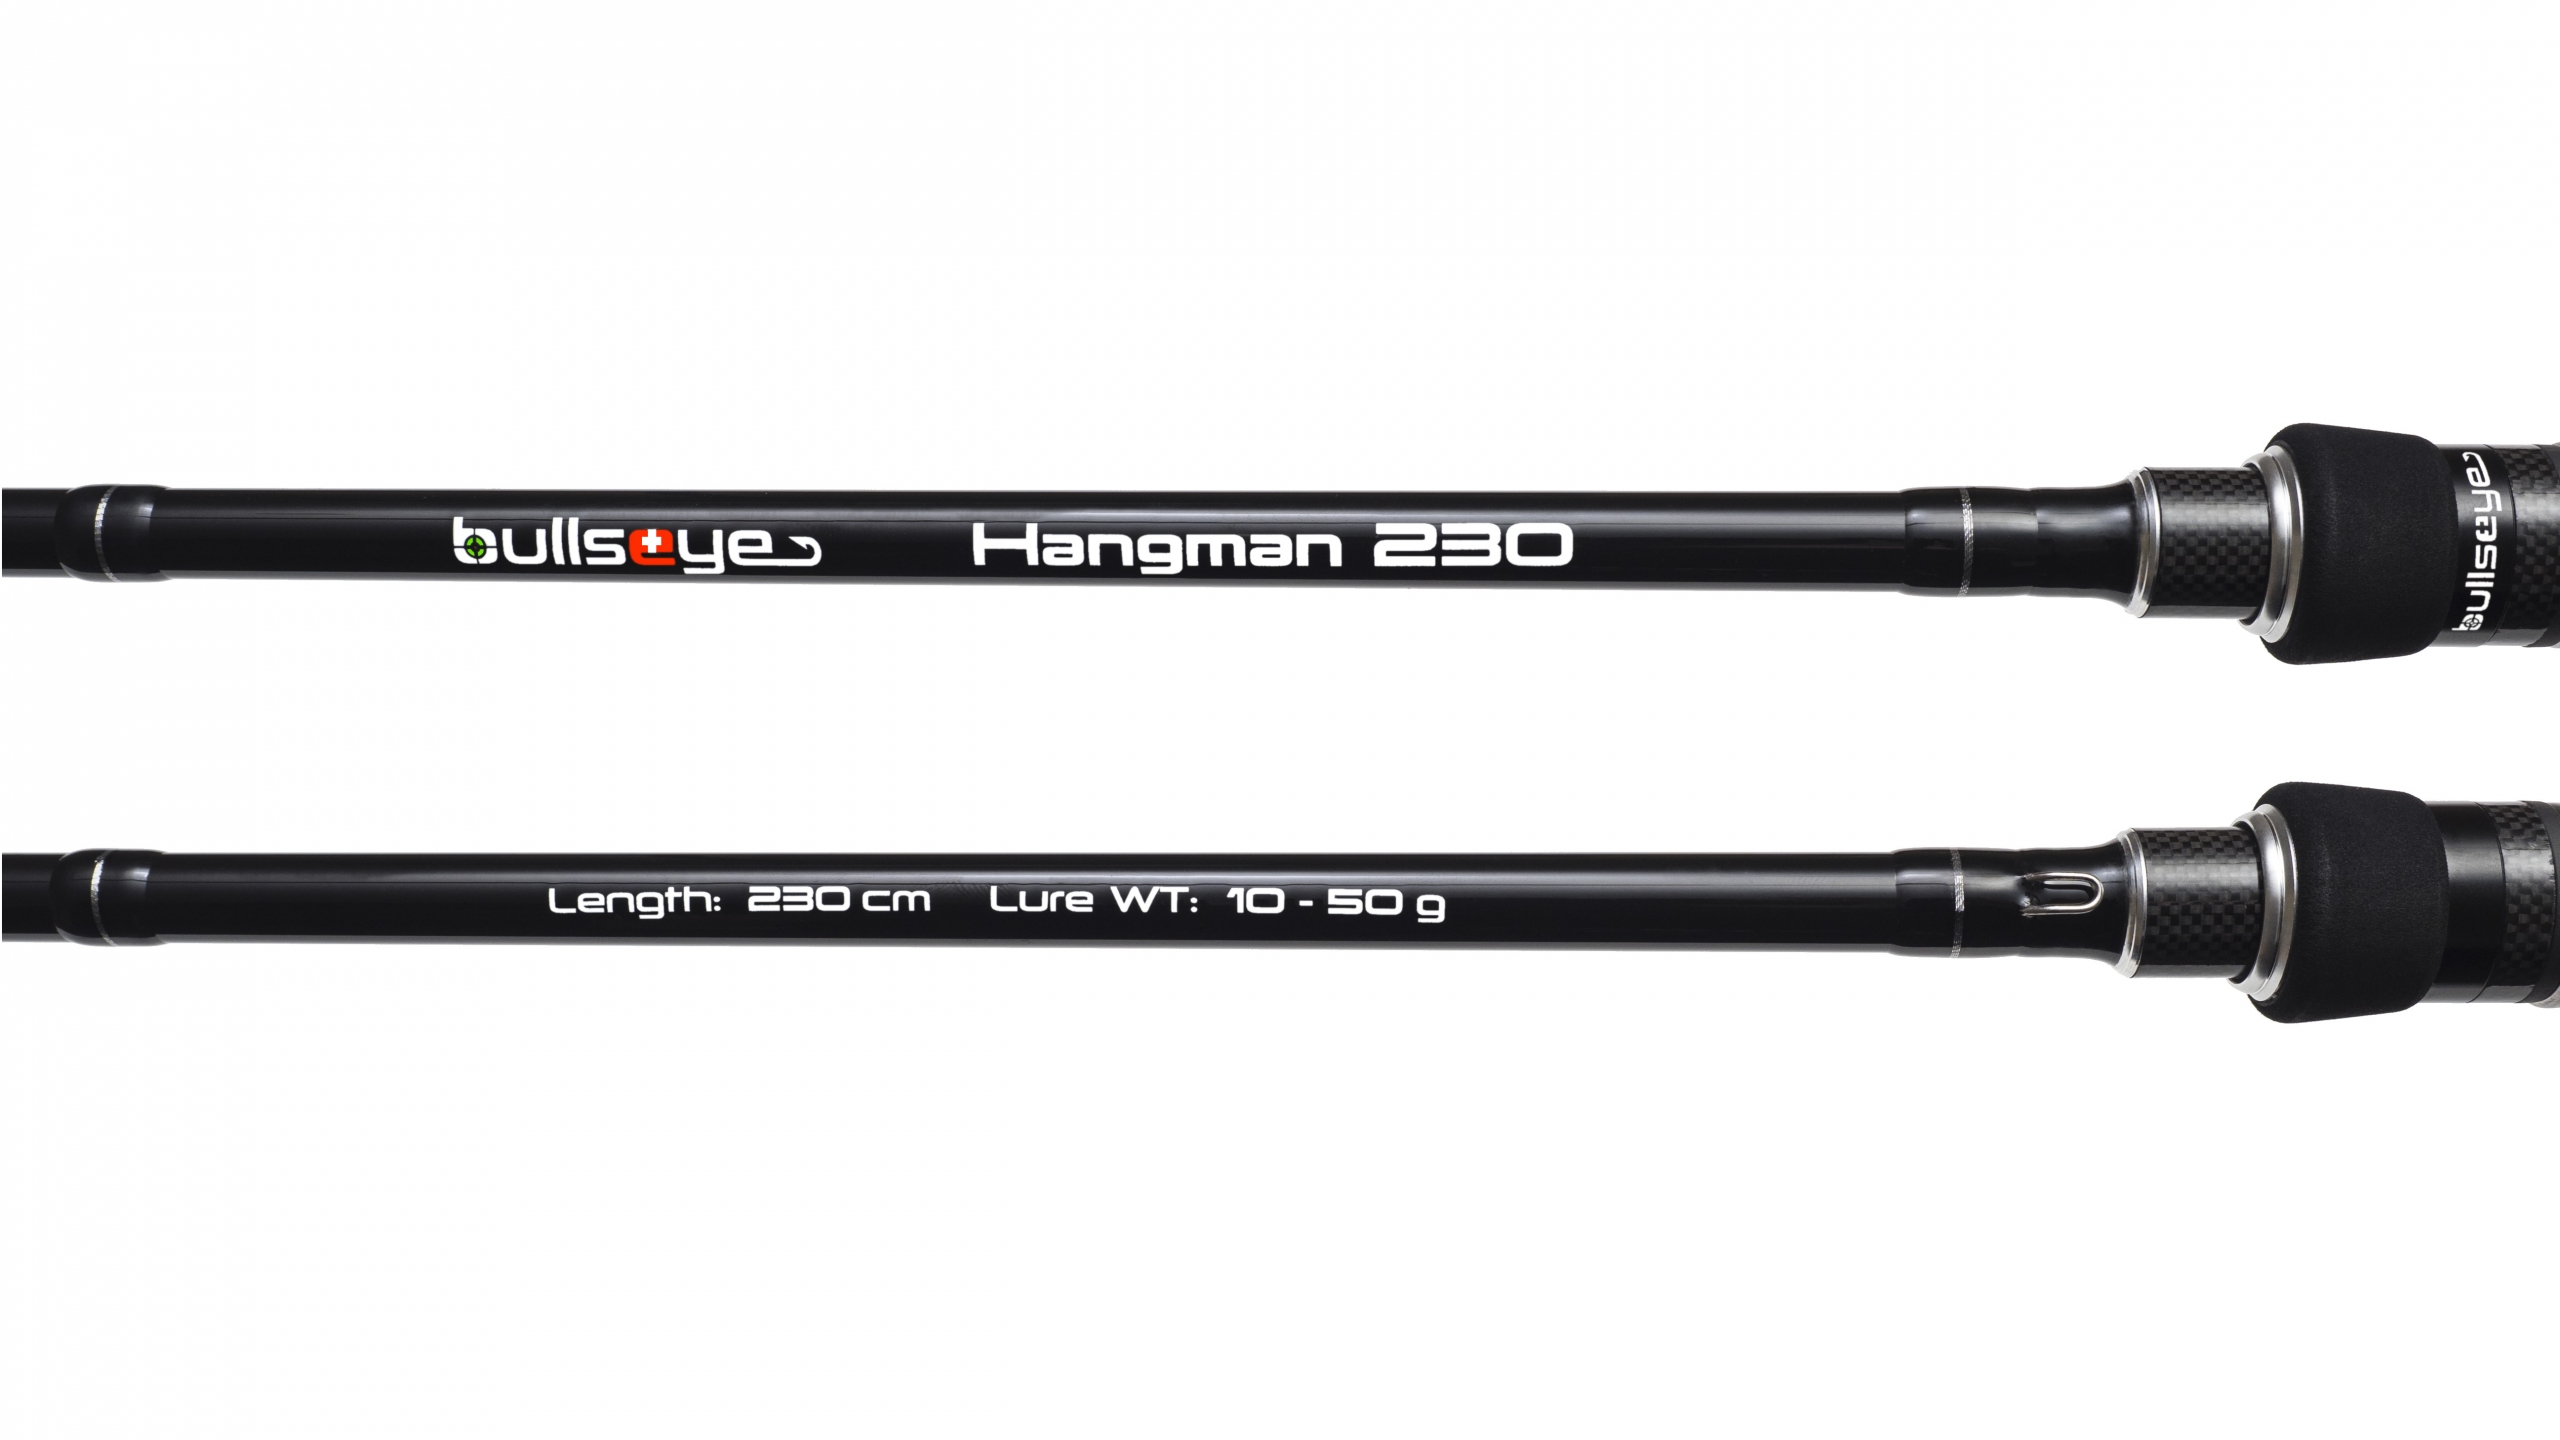 Hangman 230cm 10-50g		